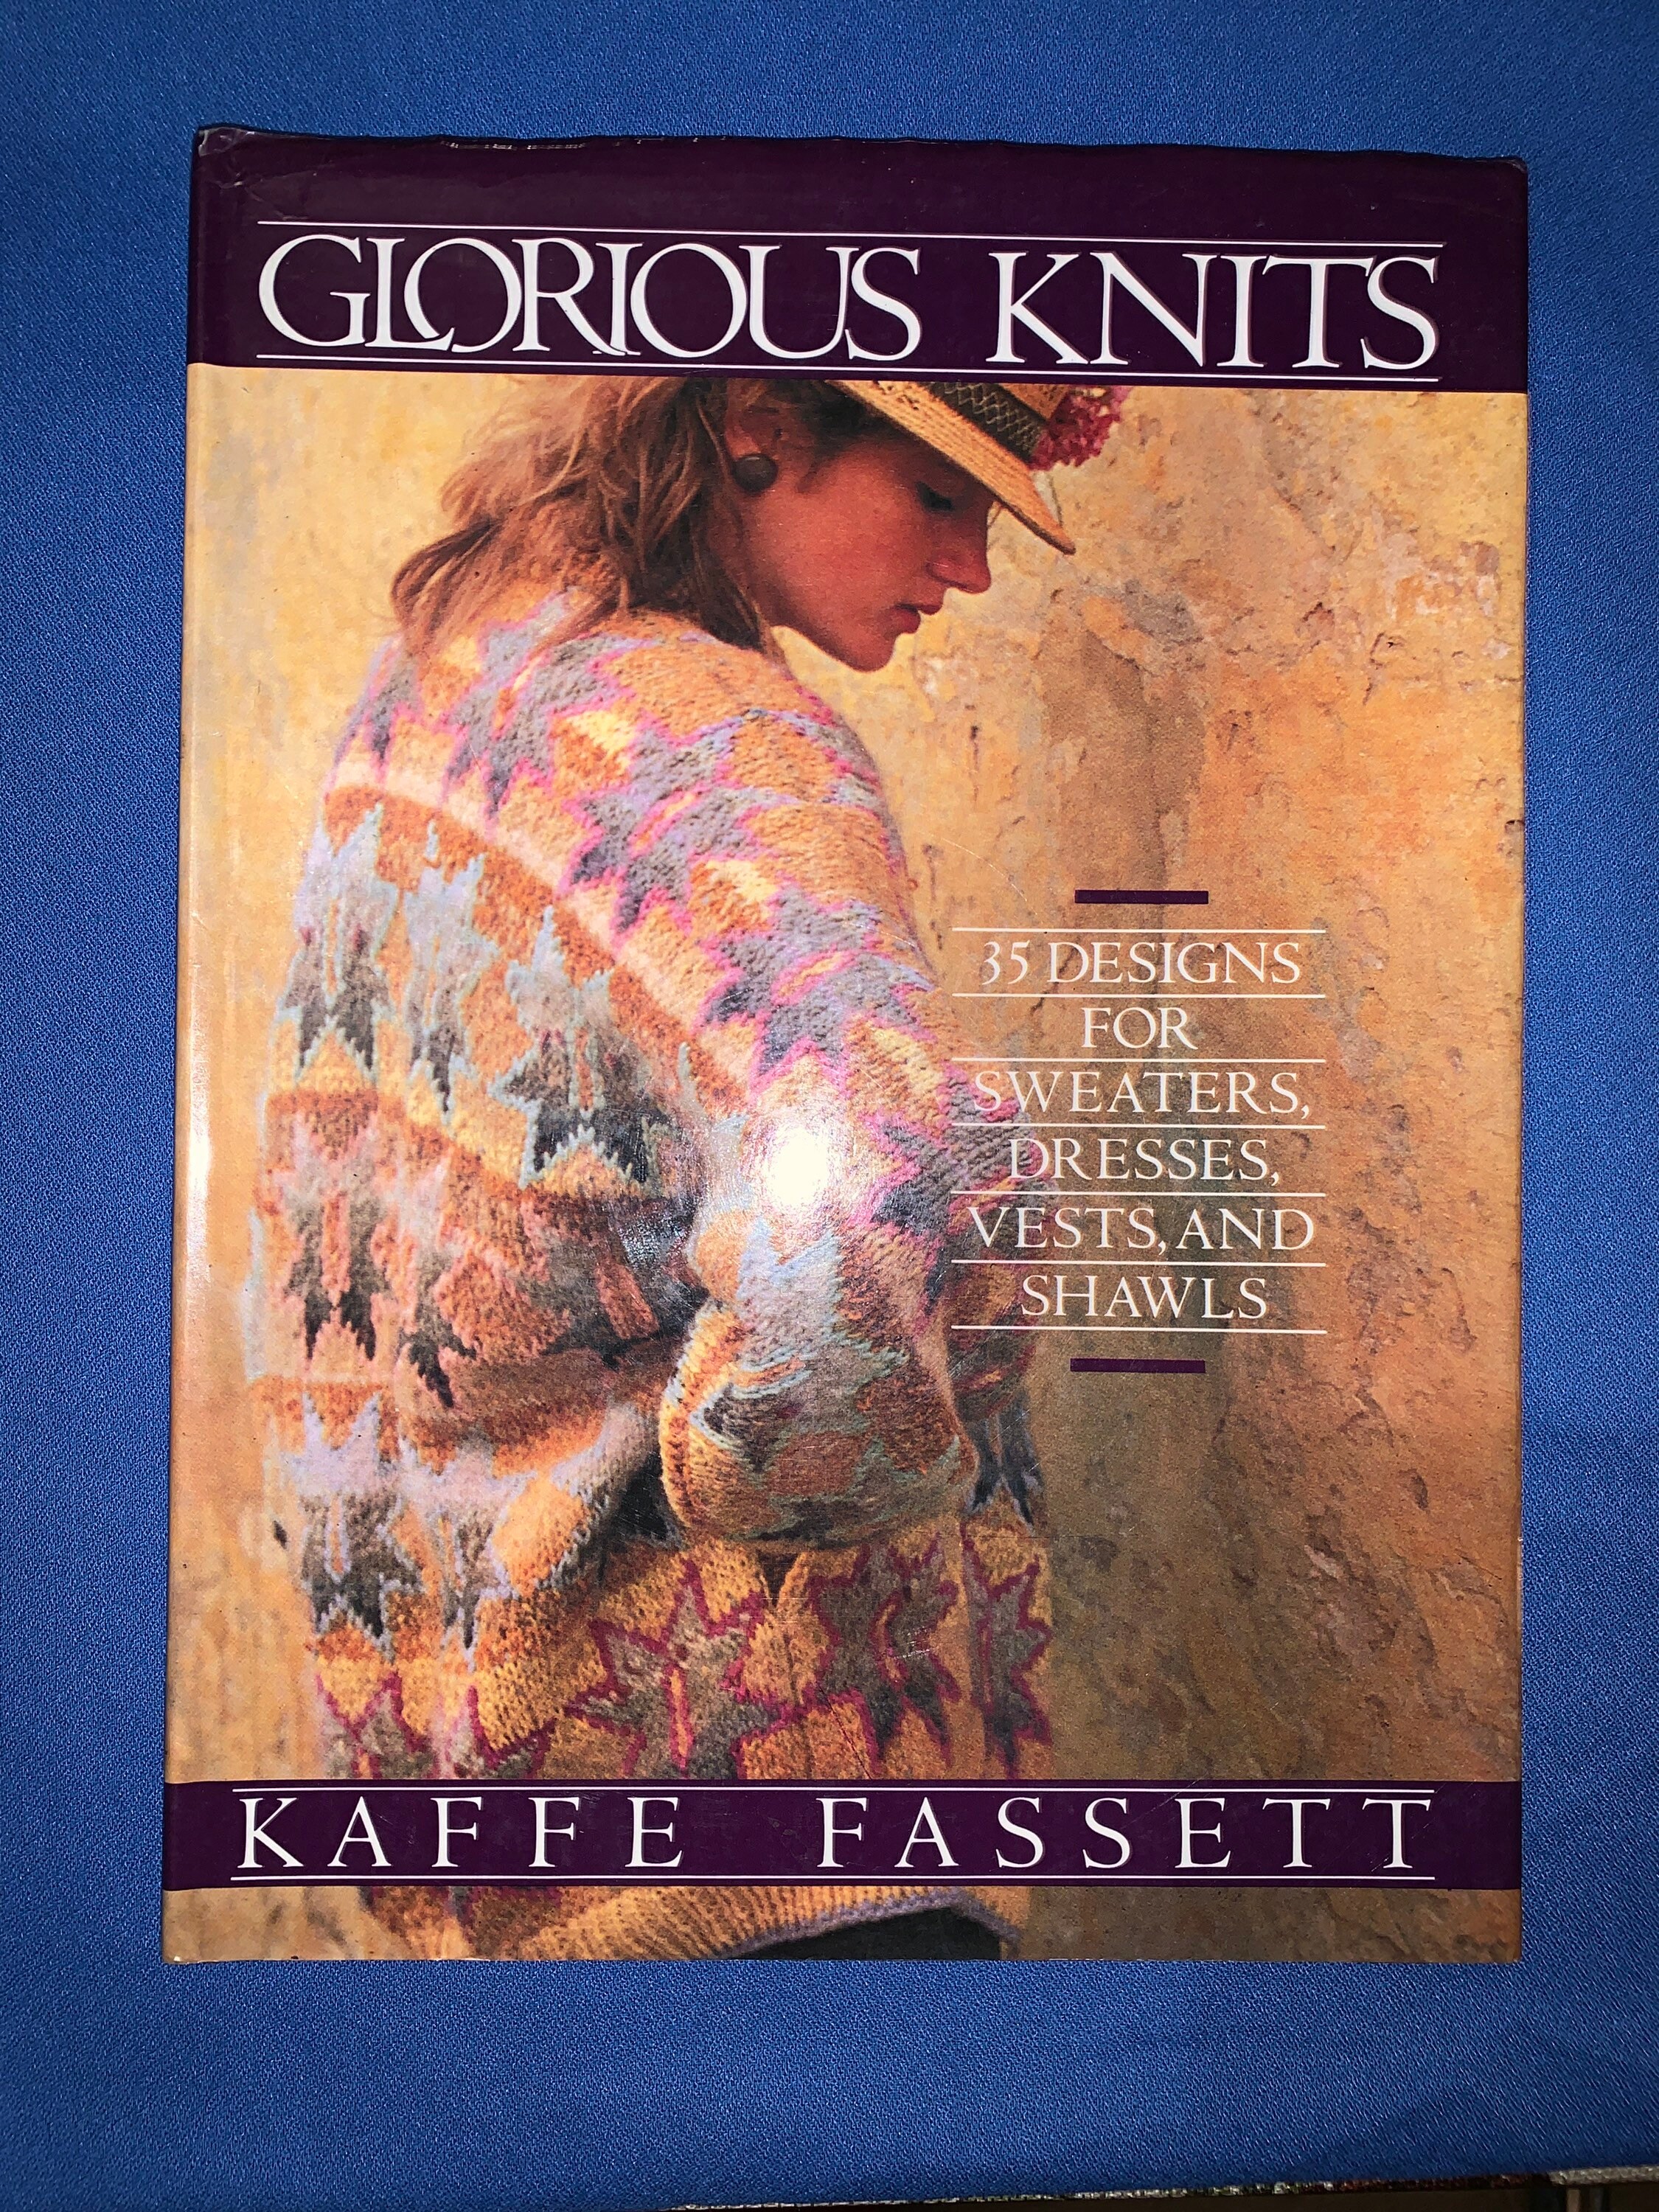 The Essential Kaffe Fassett Bookshelf – Modern Daily Knitting